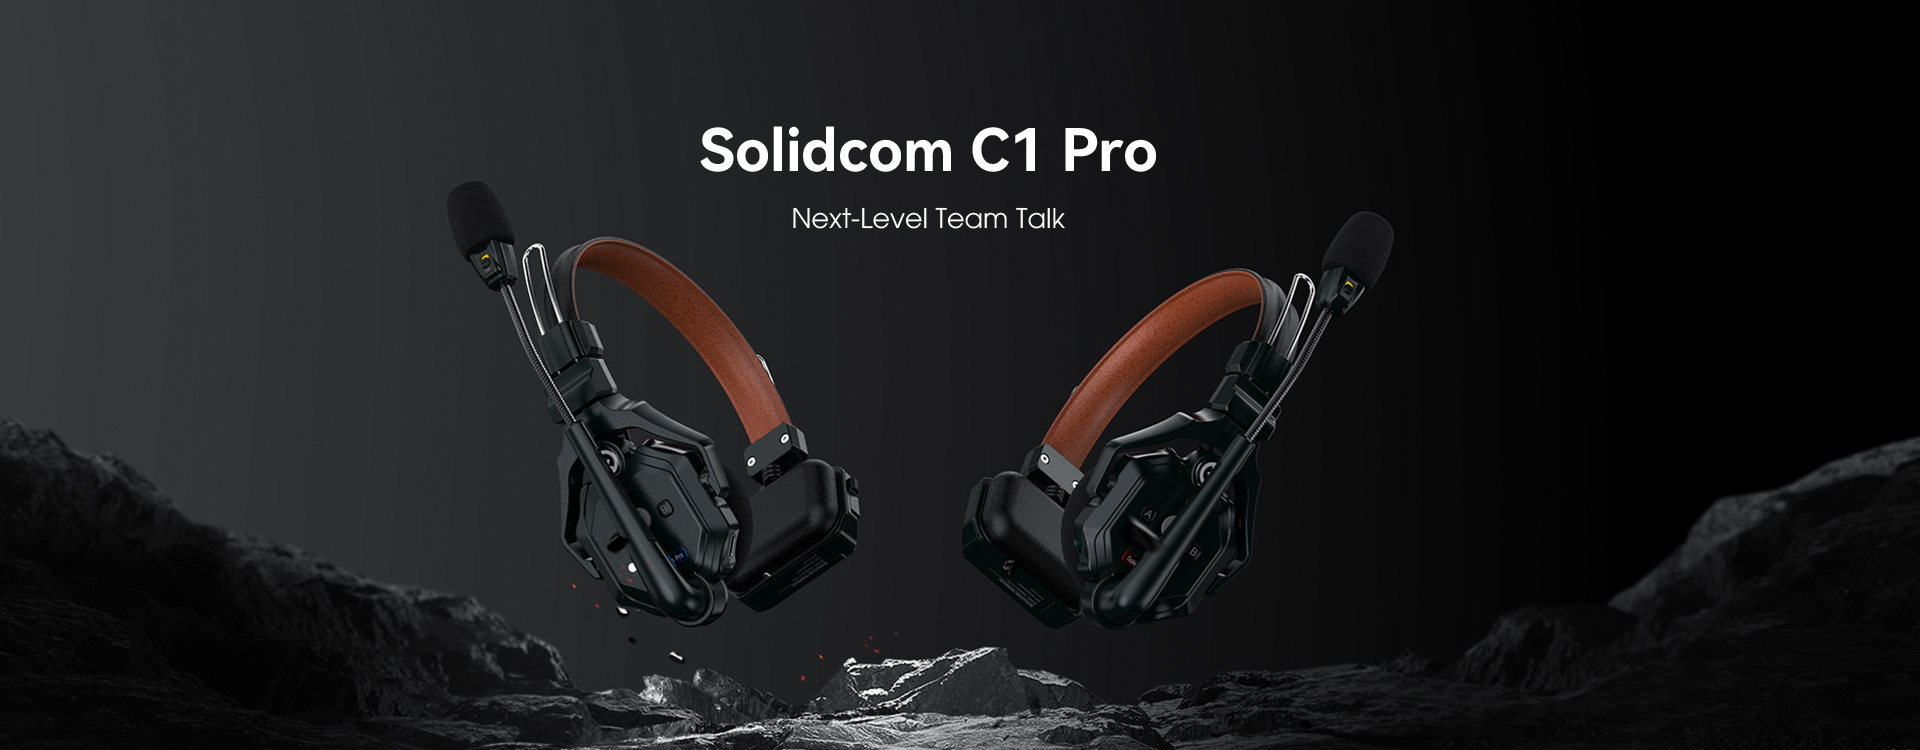 Solidcom C1 Pro